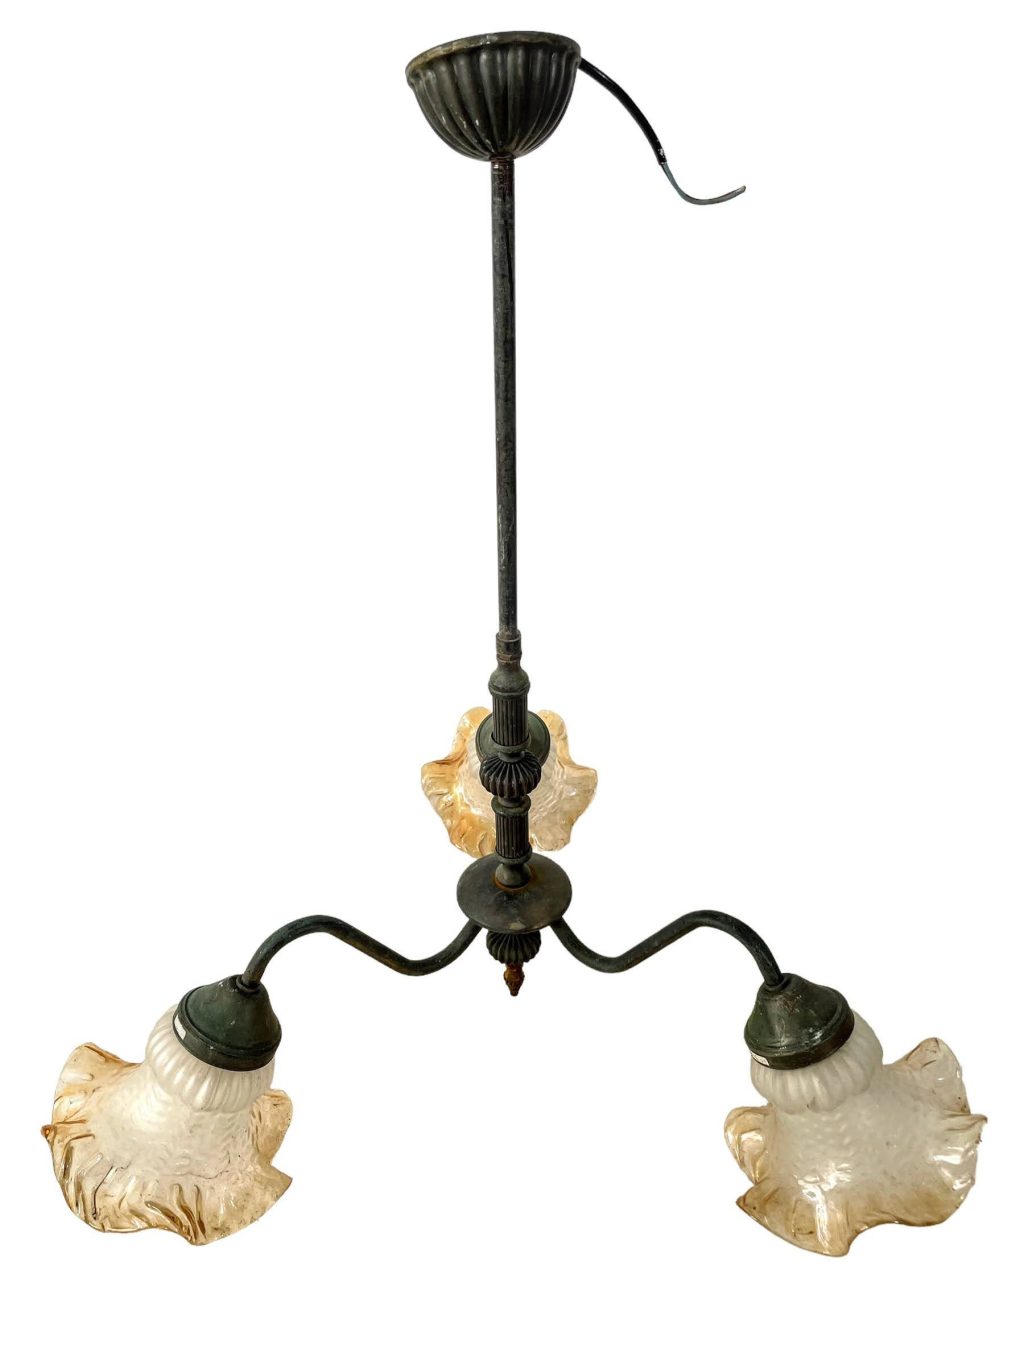 Vintage French Ornate Regency Style Hanging Pendant Light For Refurbishment Lampshade Lamp Metal Period Lighting Prop c1950-60’s